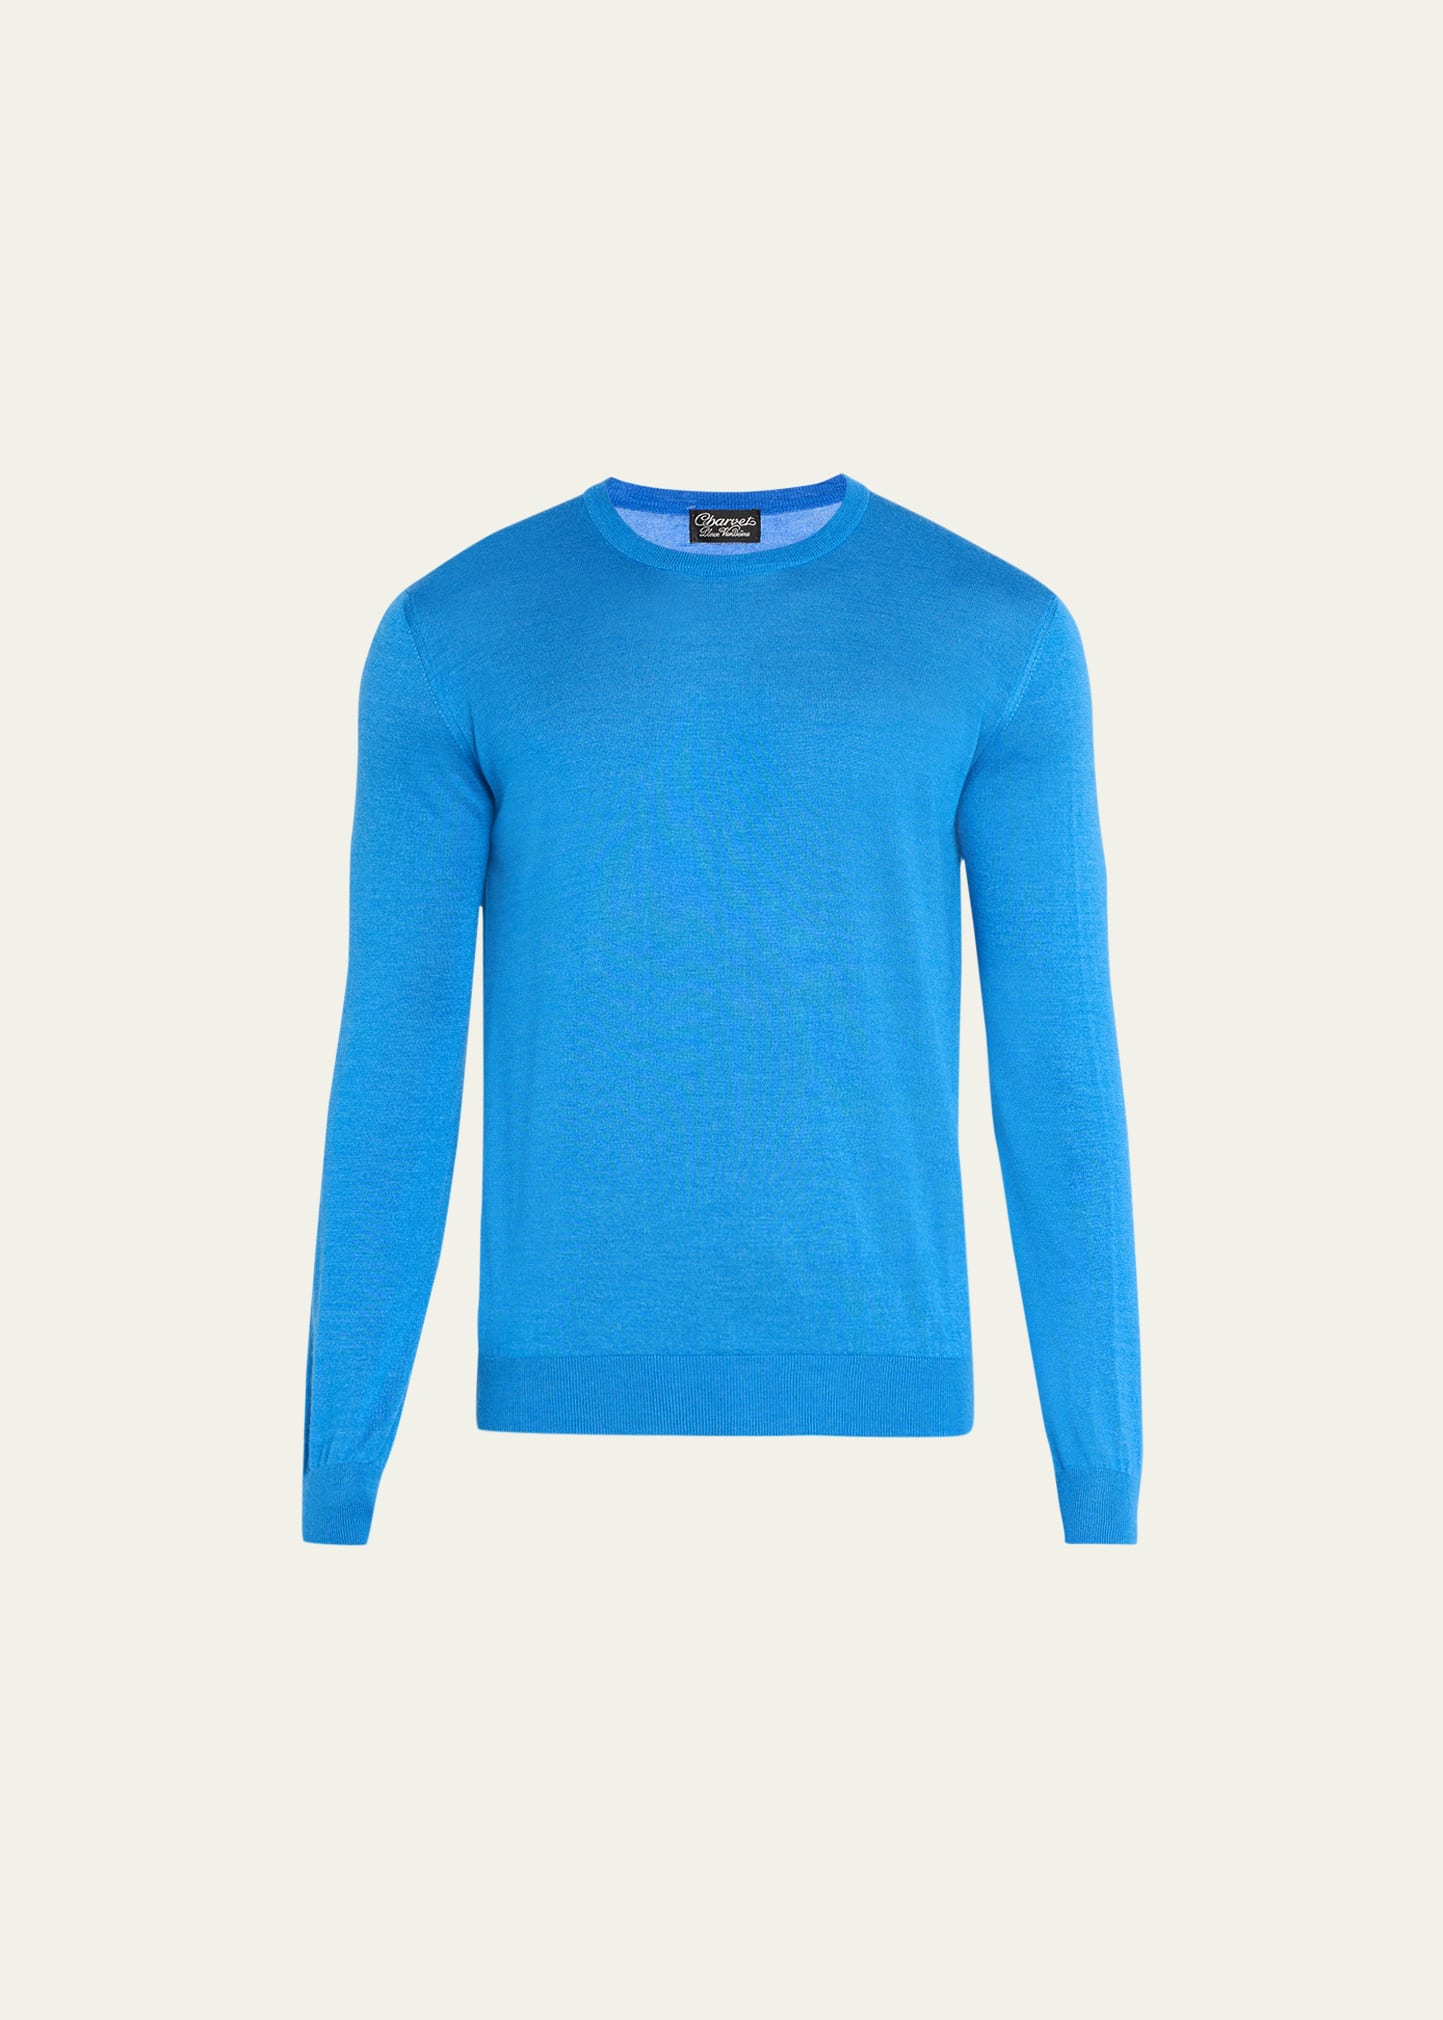 Charvet Men's Solid Cashmere-Silk Crewneck Sweater